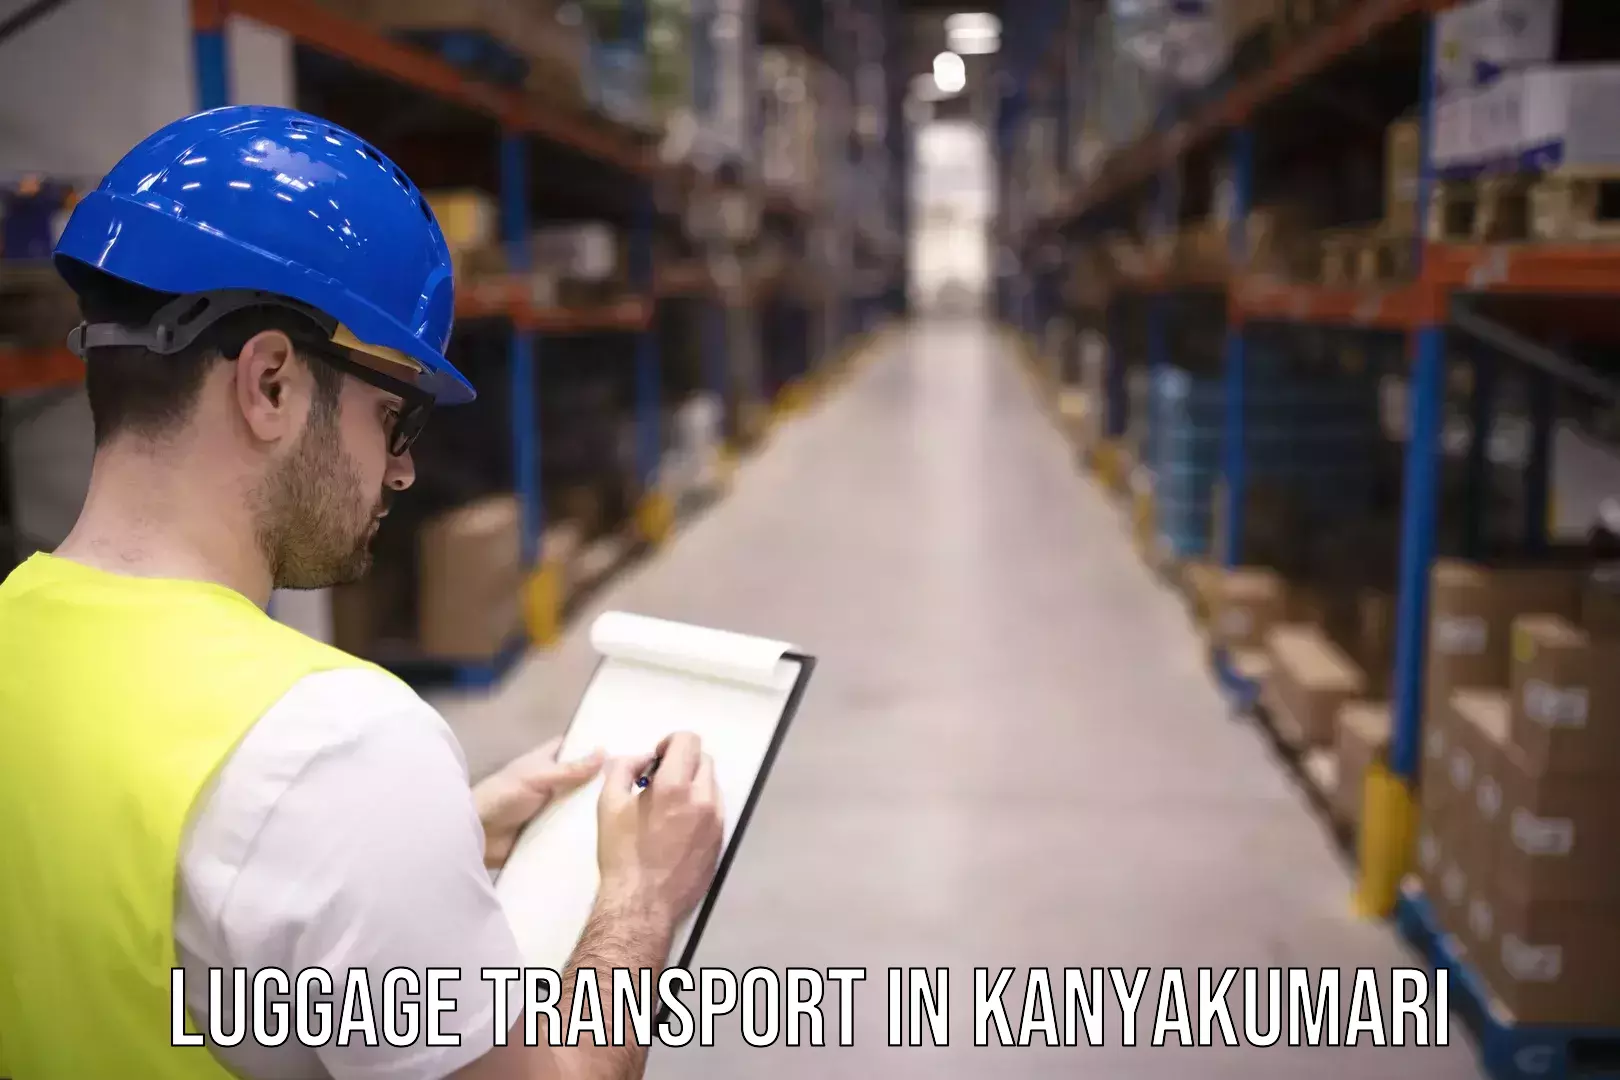 Baggage delivery technology in Kanyakumari